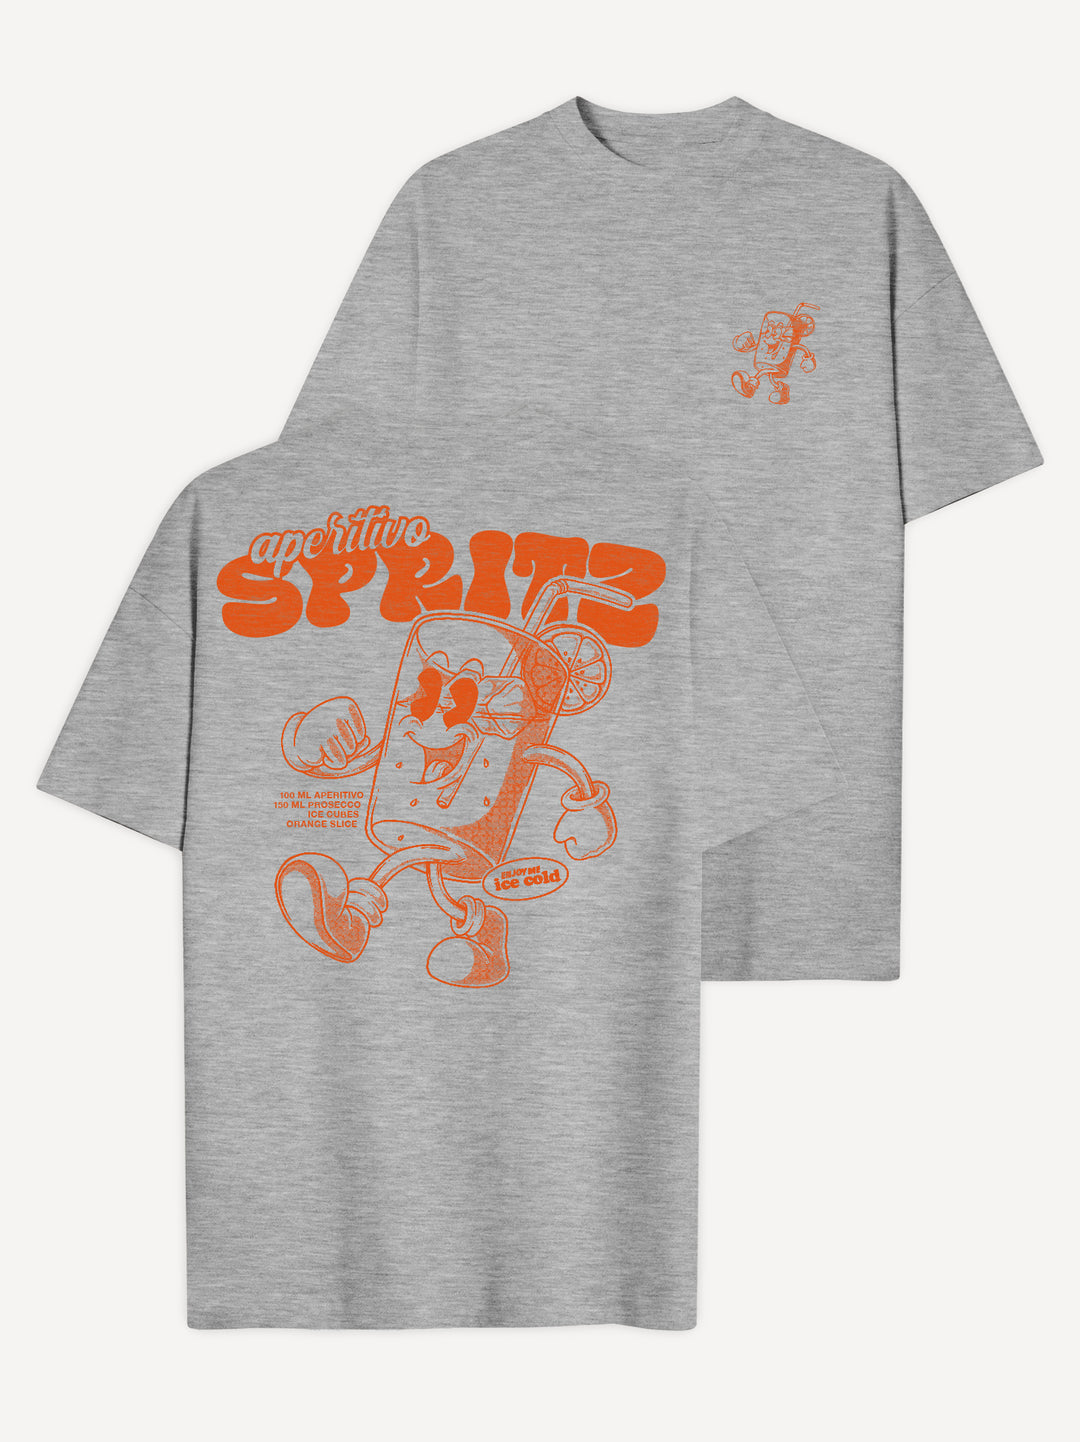 Aperitivo Spritz T-Shirt